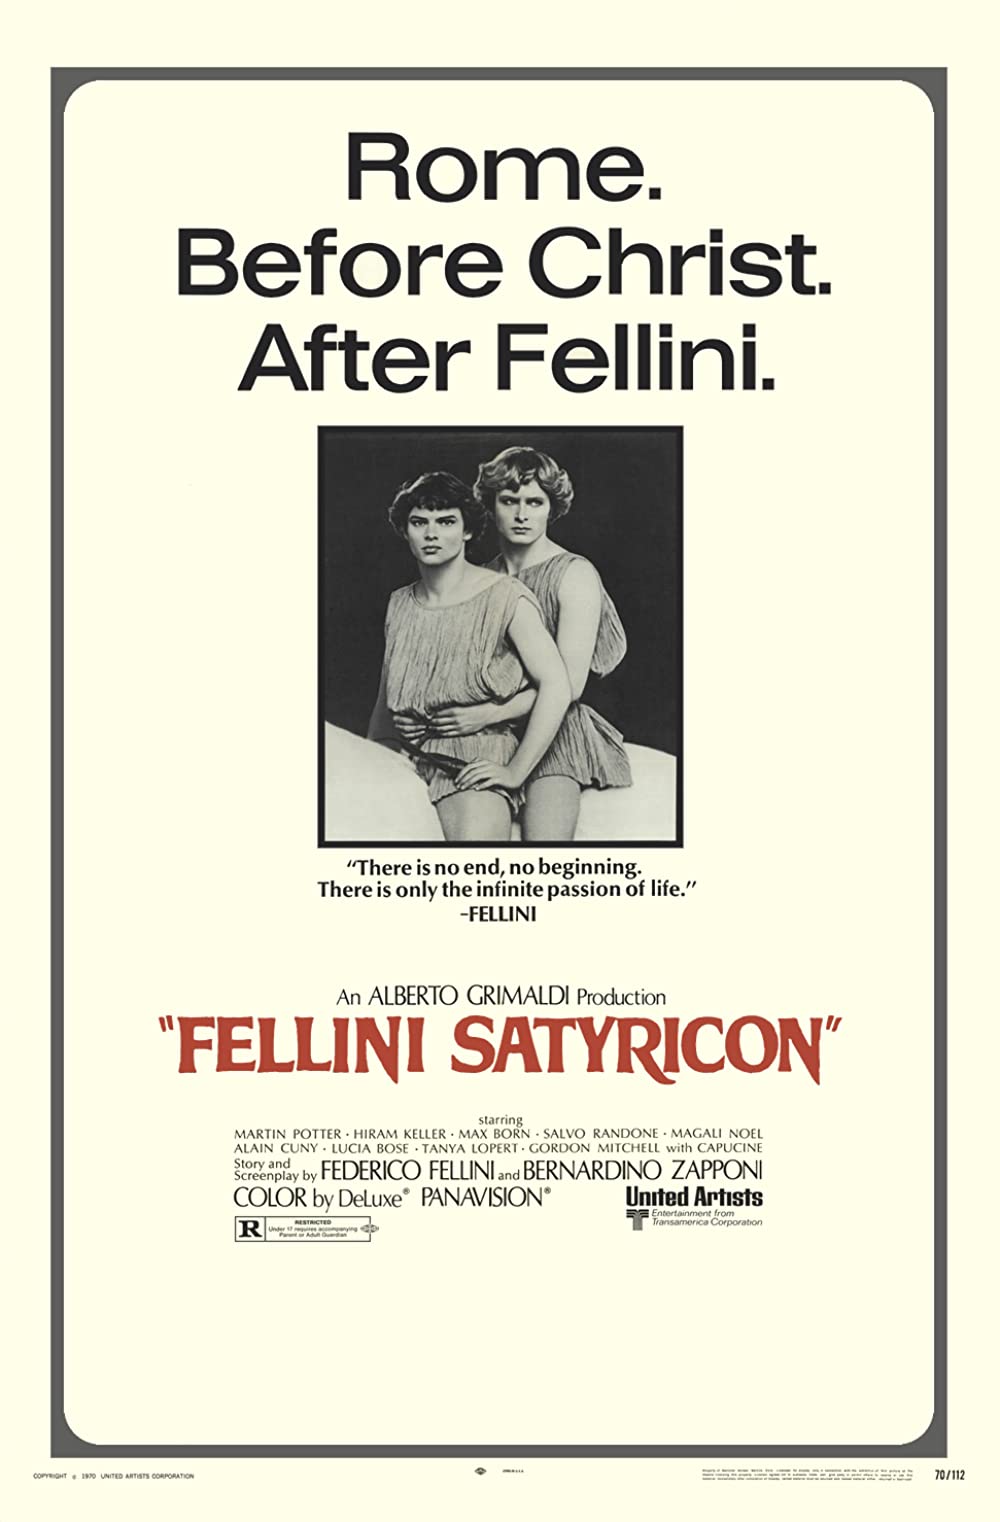 Fellini-Satyricon